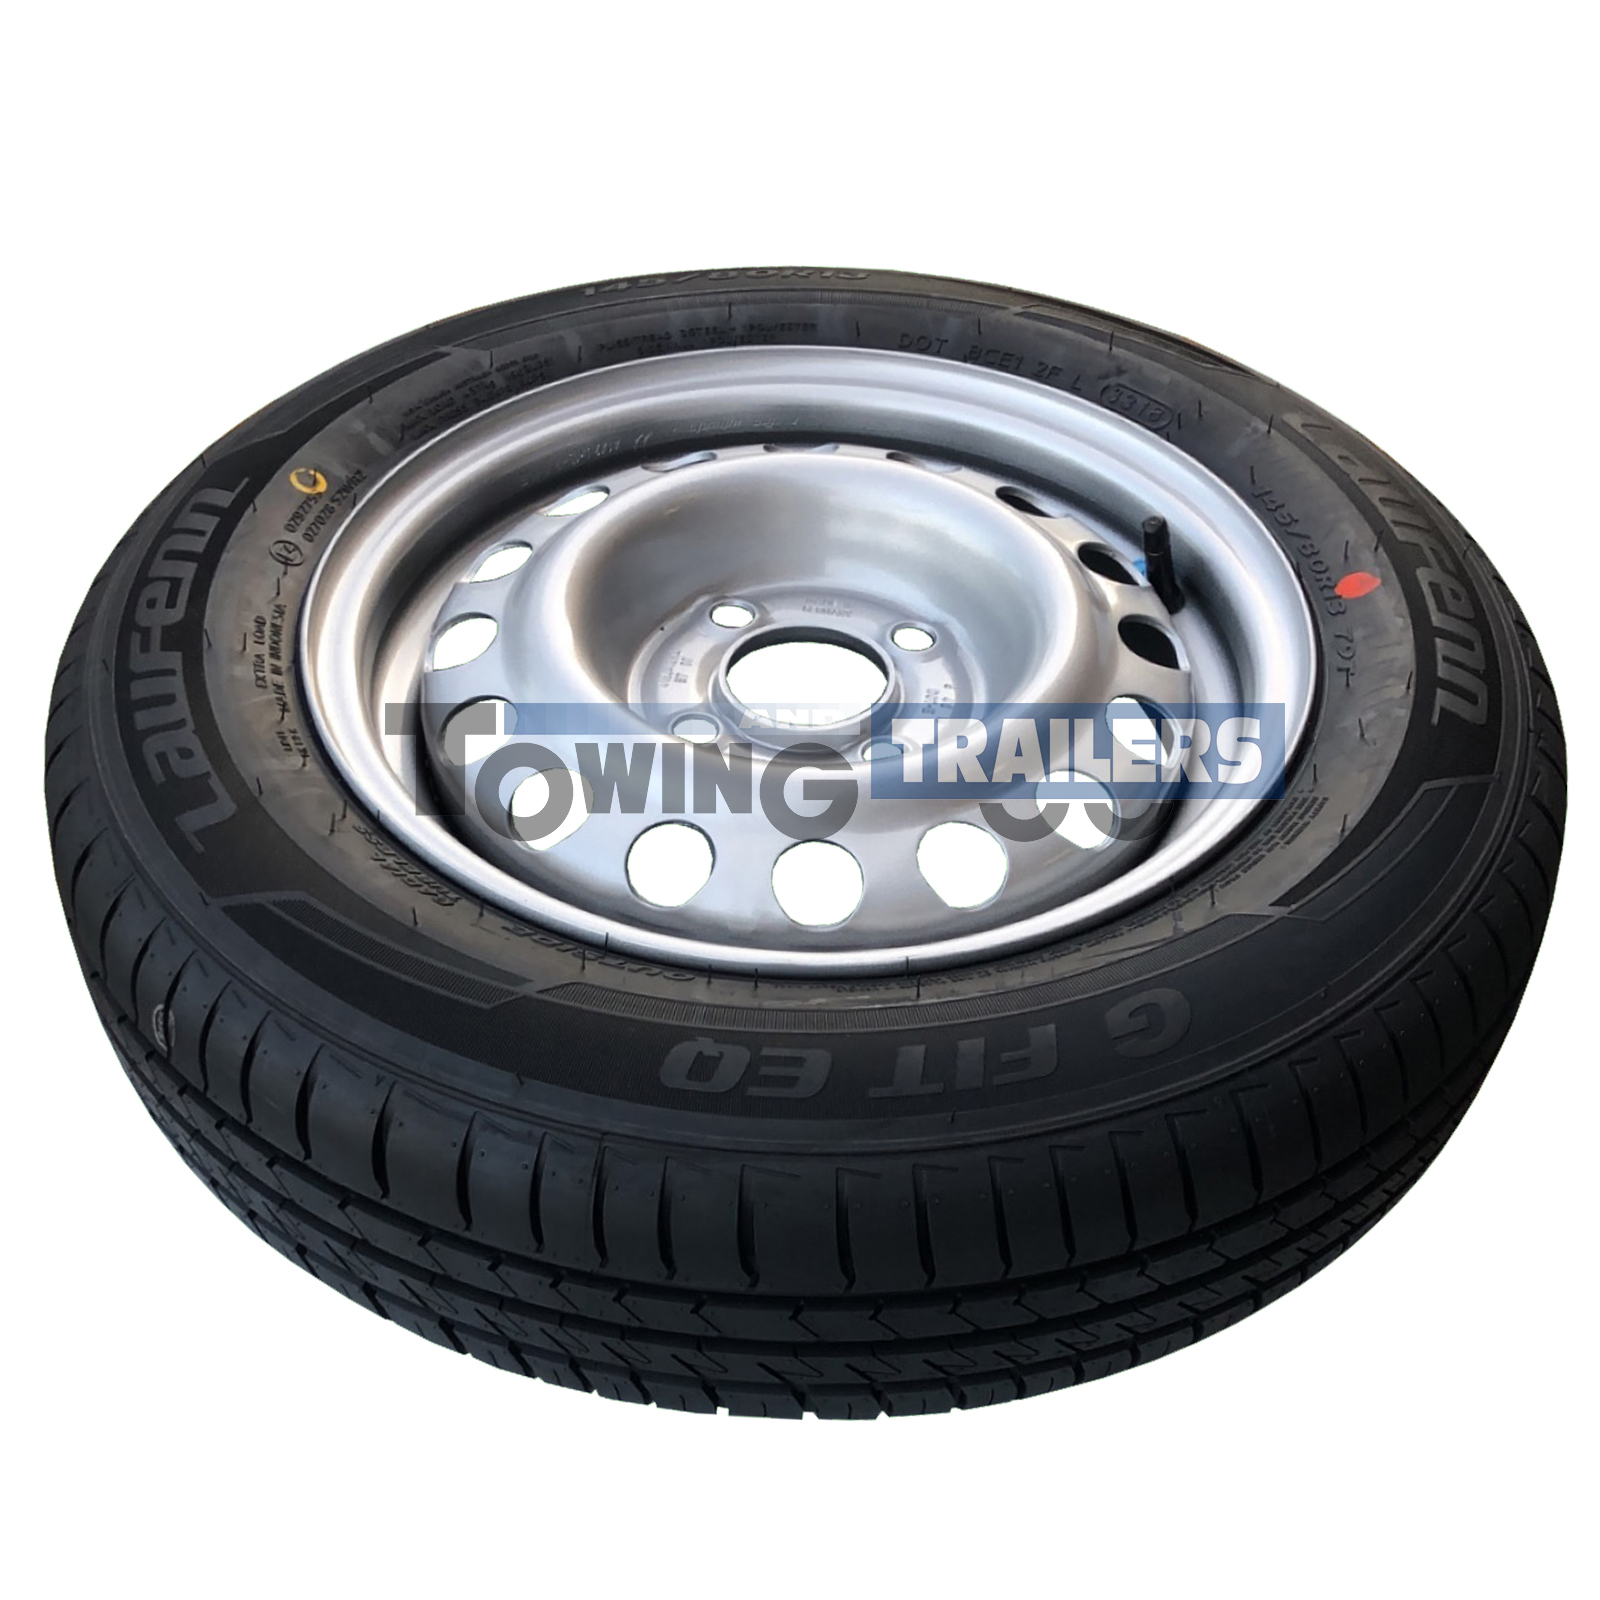 2x 145/80R13 4 Ply 78N Trailer Tyres on a 4 Stud x 100mm PCD Wheel Rim ET30